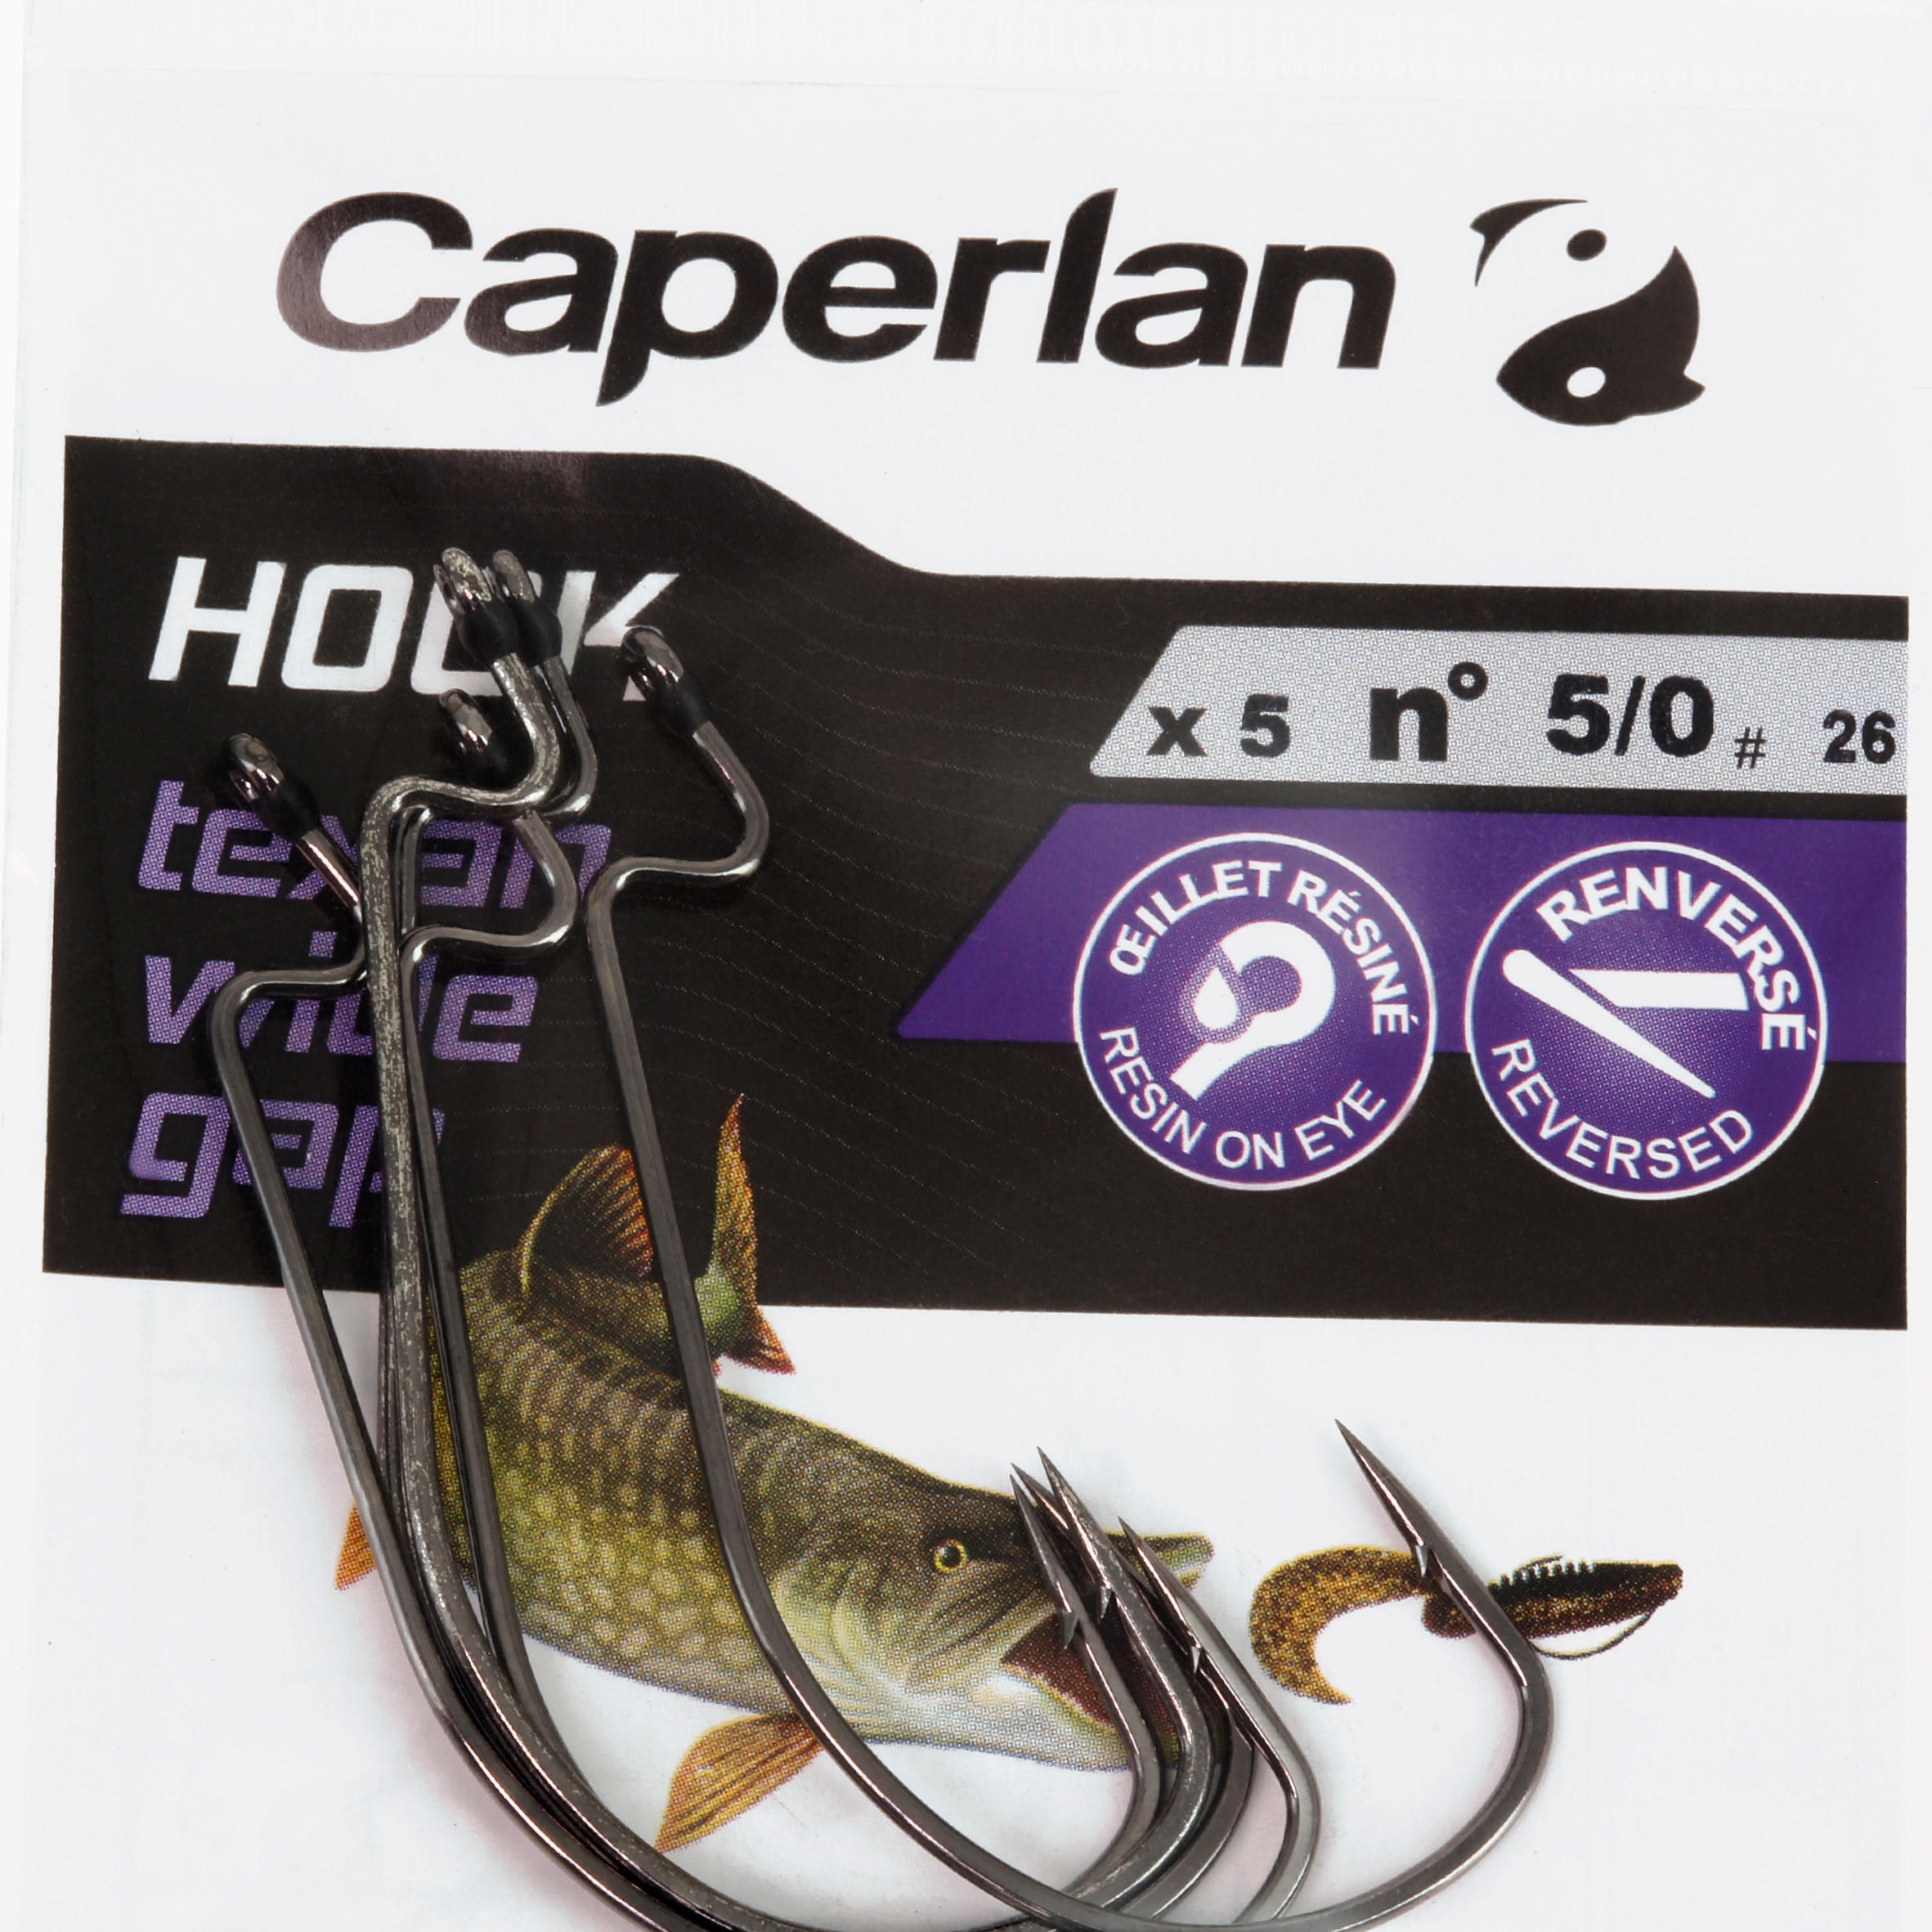 TEXAN HOOK TEXAN WIDE GAP 5/0 FISHING HOOK  - CAPERLAN